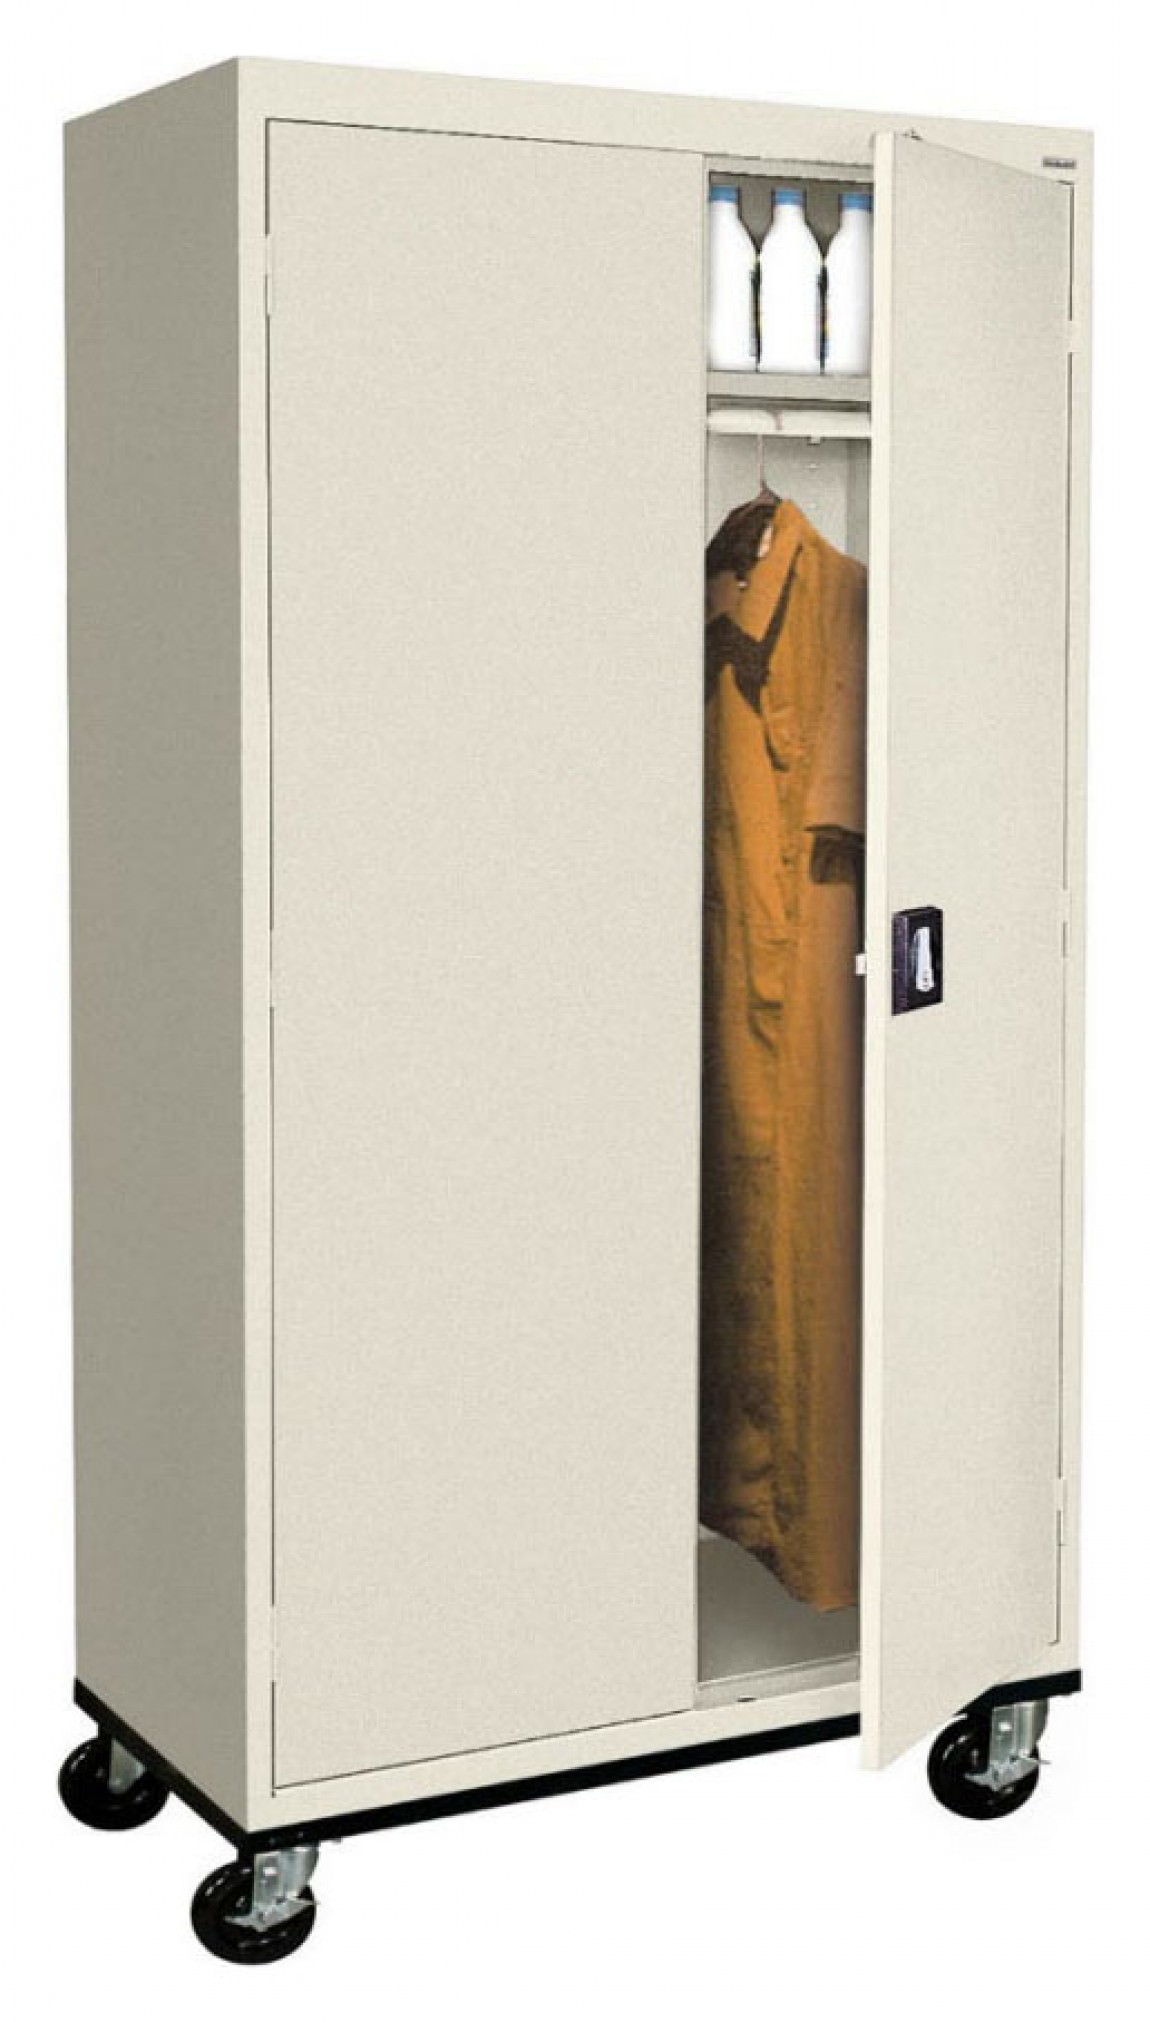 https://madisonliquidators.com/images/p/1150/34348-mobile-wardrobe-storage-cabinet-1.jpg